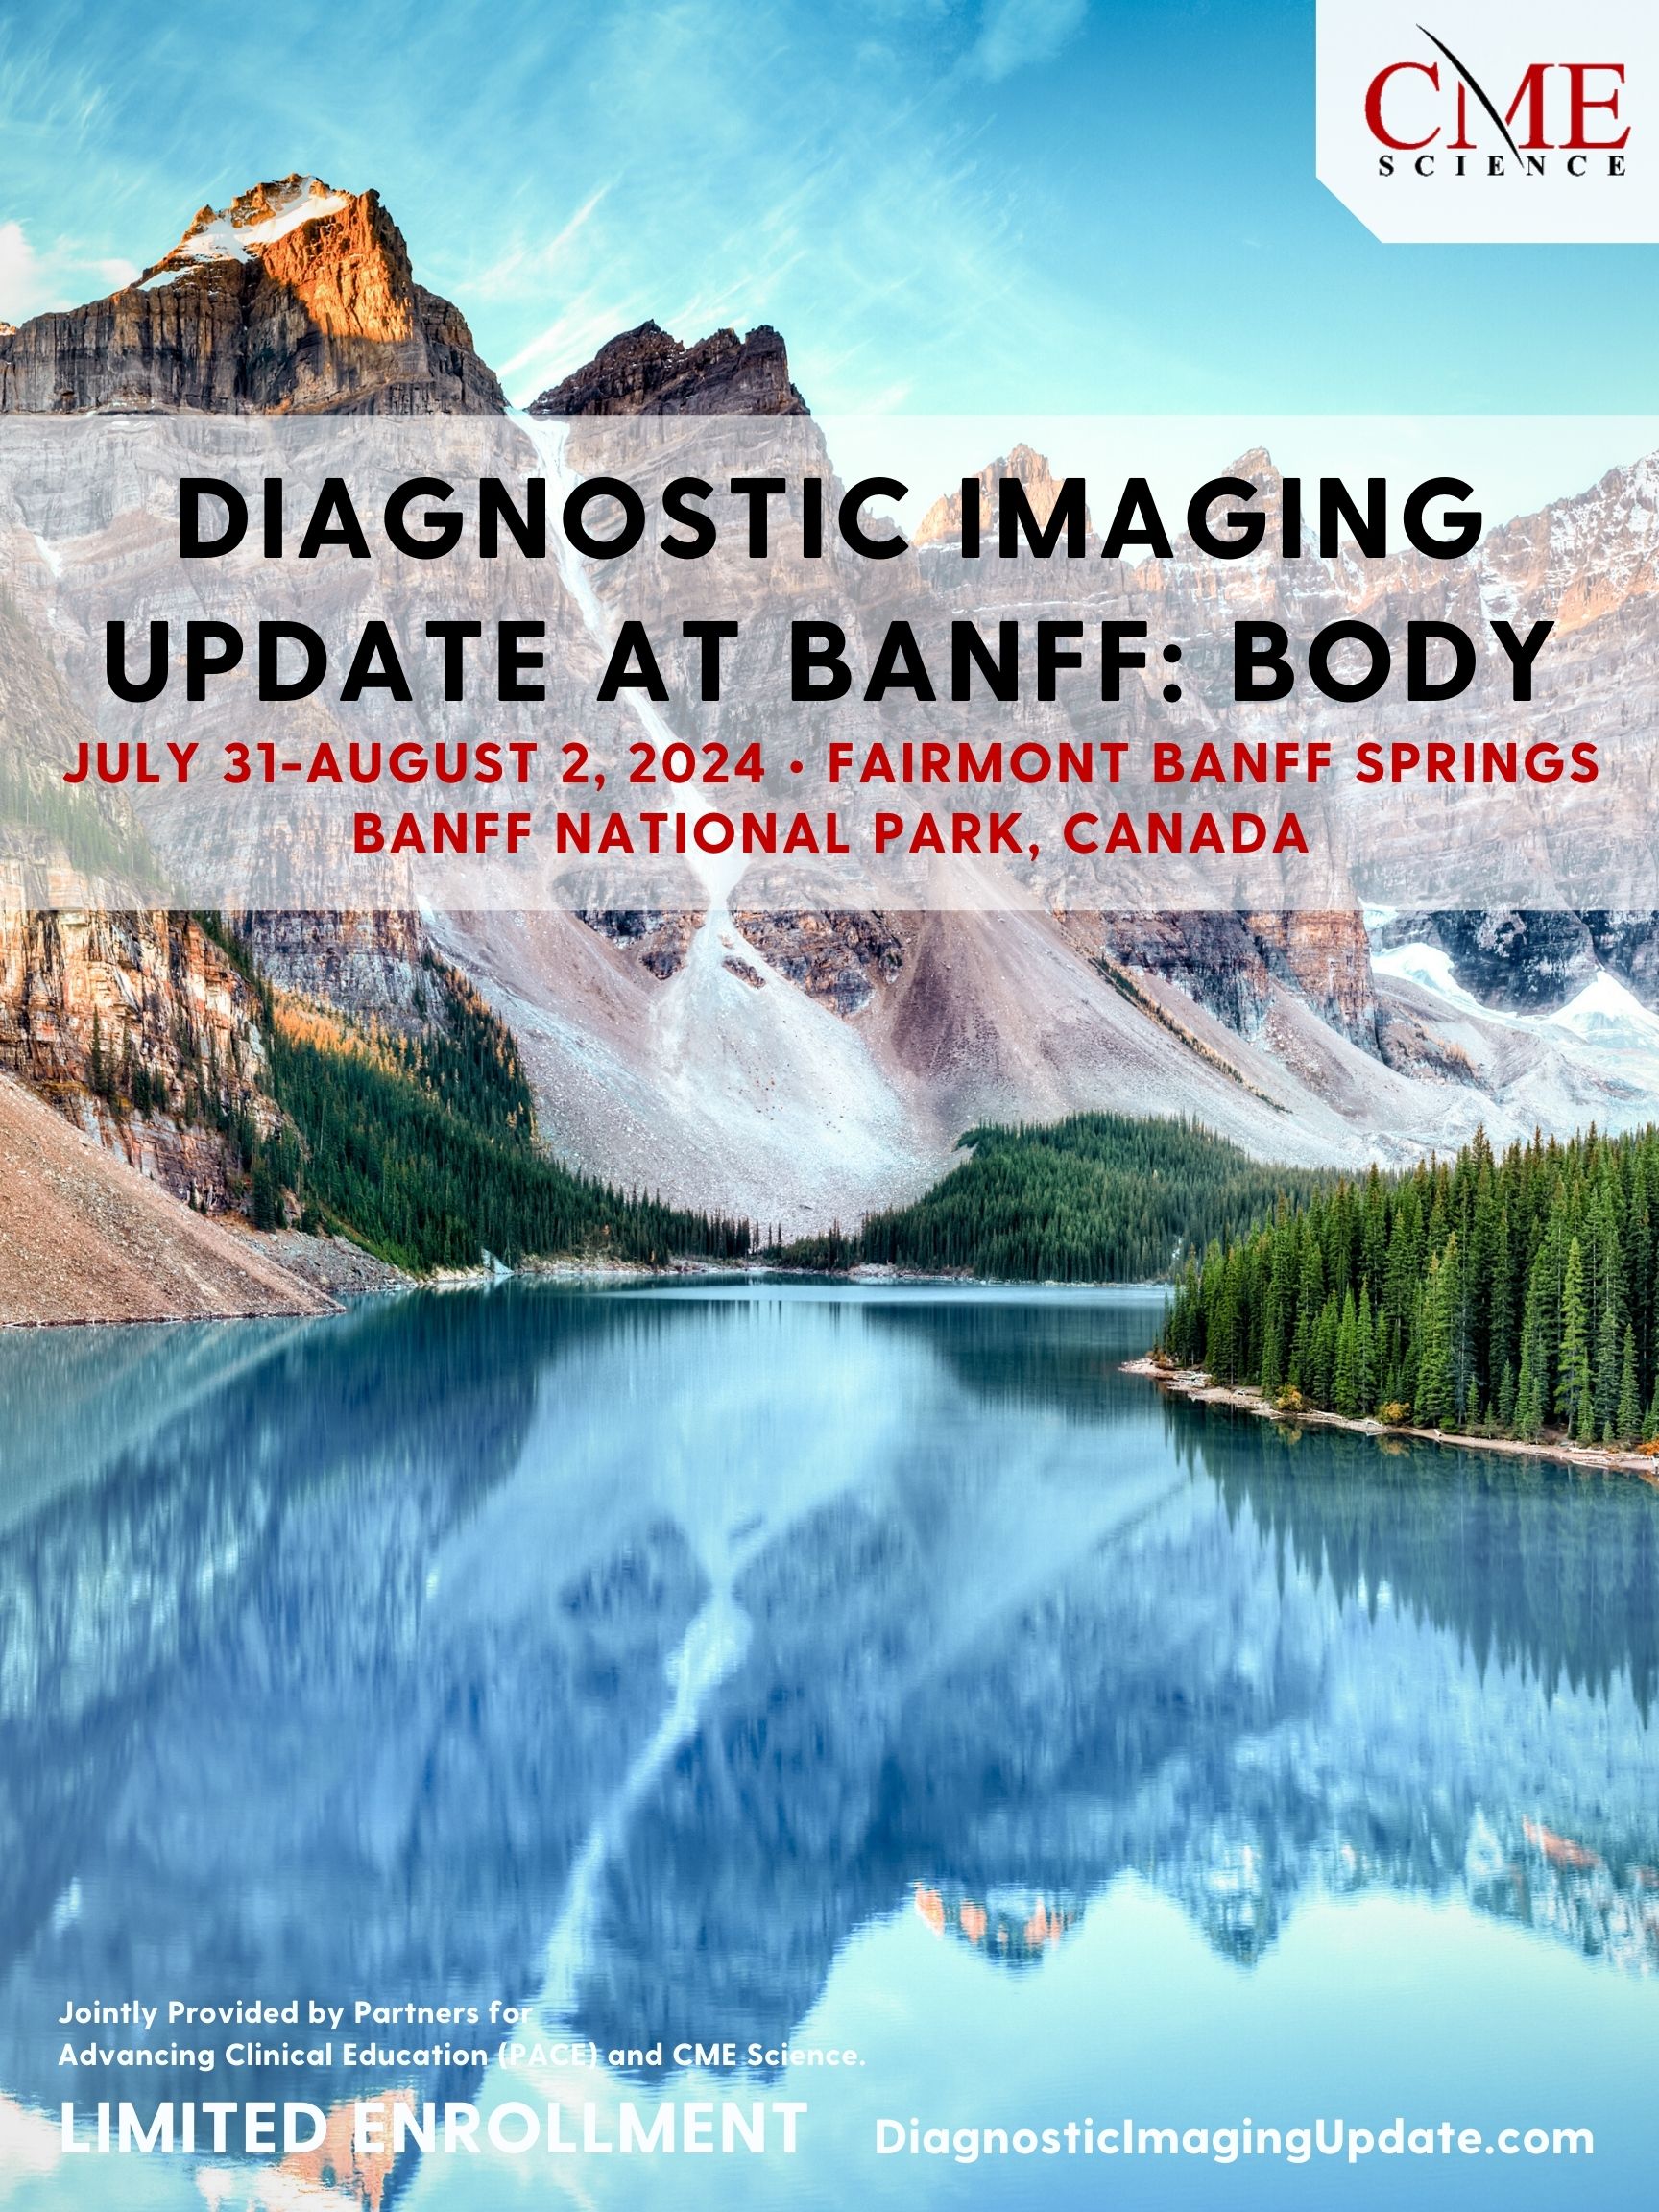 Fairmont Banff Springs Body Diagnostic Imaging Update